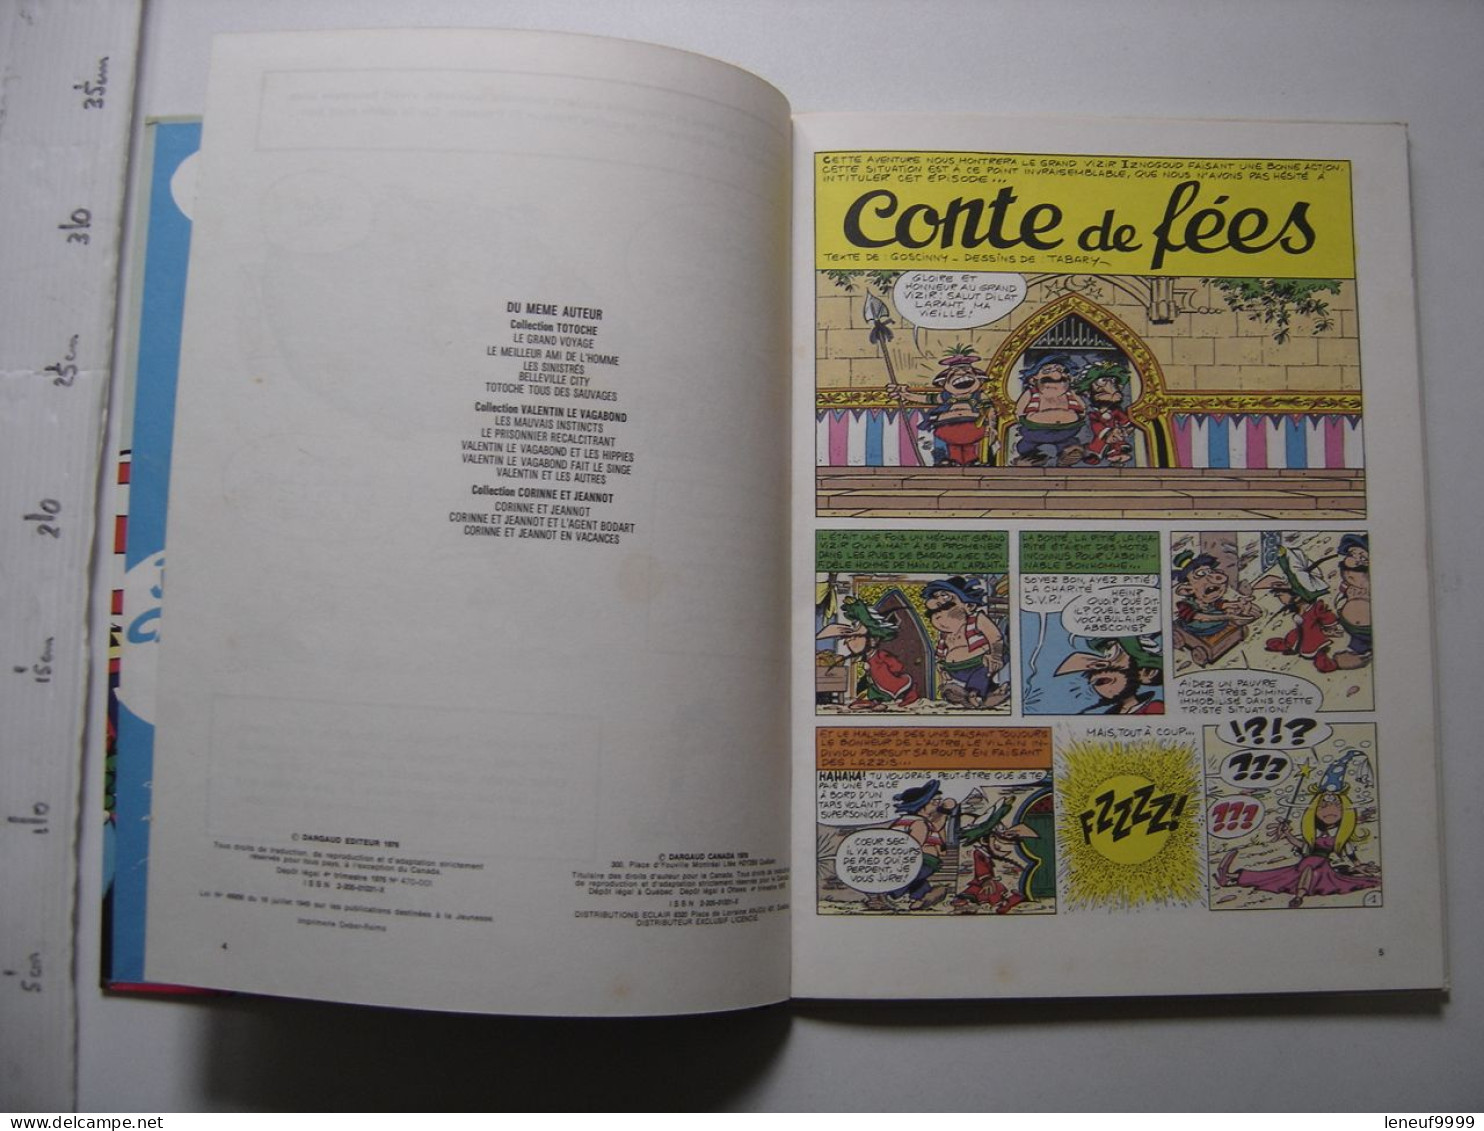 1976 EO Aventures Du Grand Vizir IZNOGOUD Le Conte De Fees GOSCINNY TABARY - Iznogoud